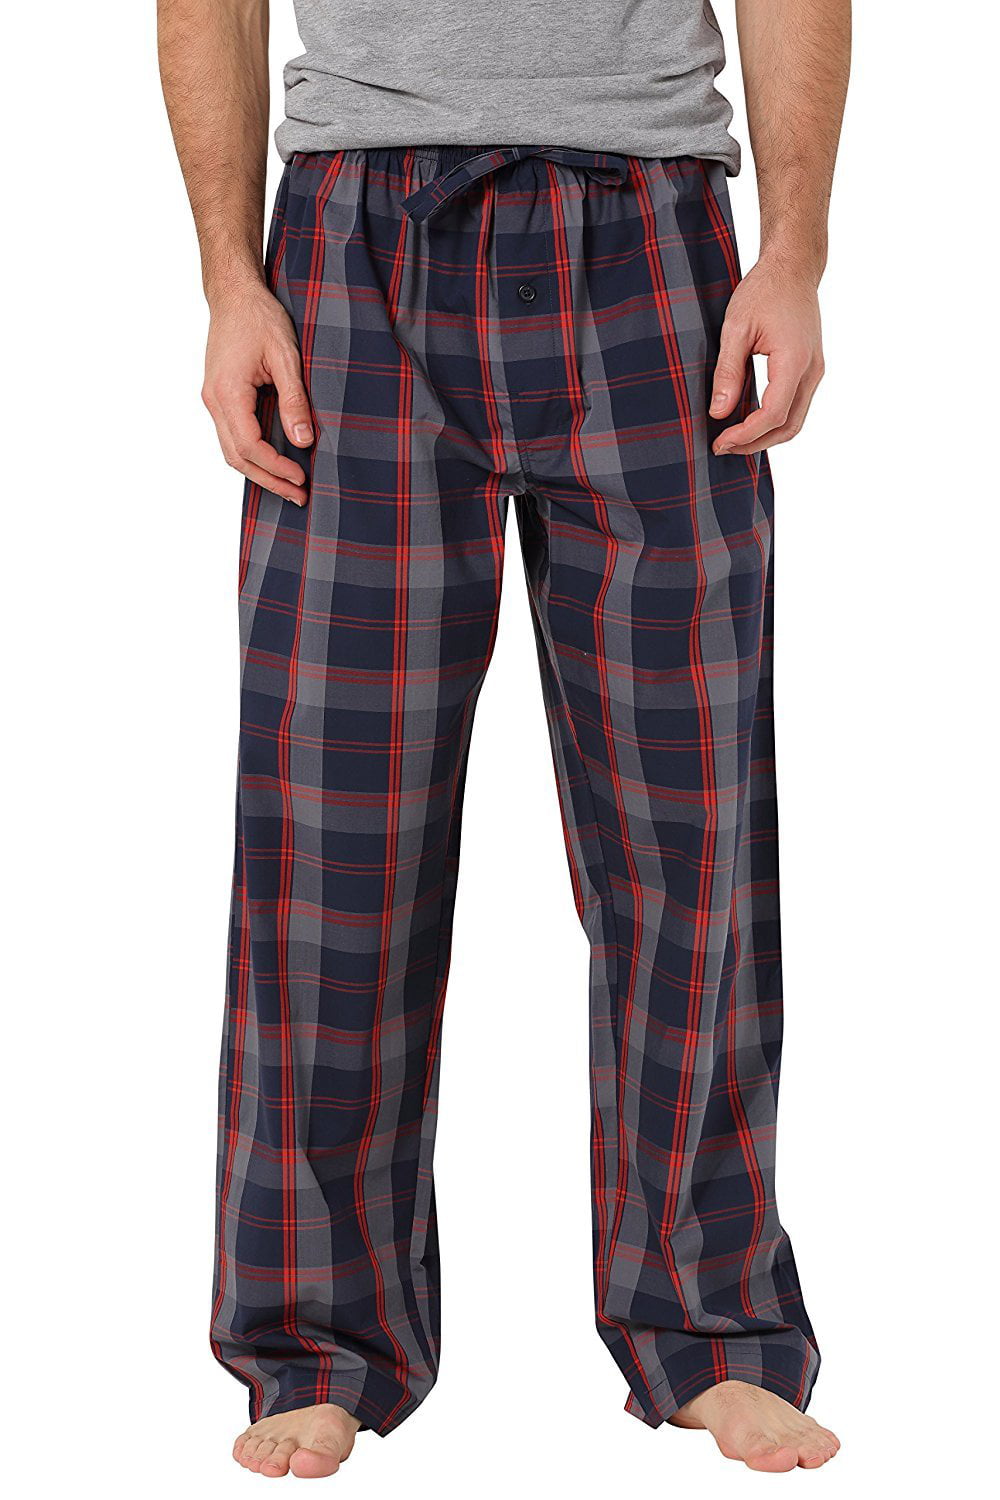 CYZ Men's 100% Cotton Poplin Pajama Lounge Sleep Pant - Walmart.com